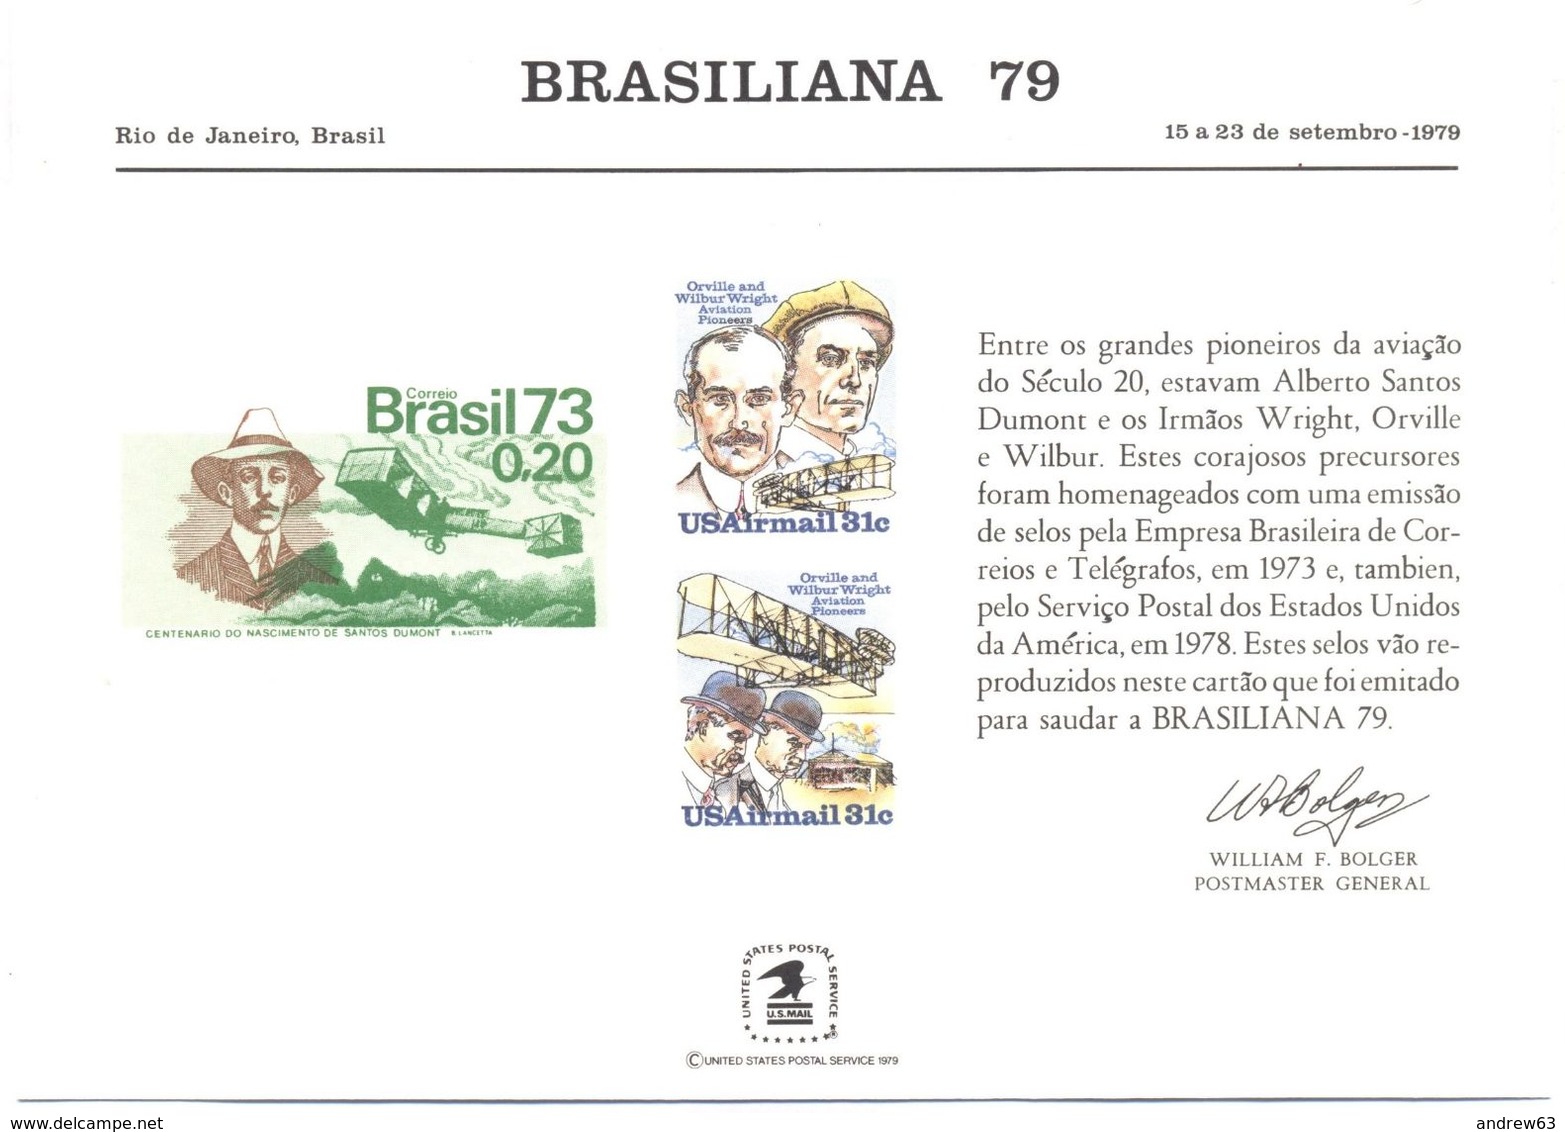 STATI UNITI - USA - 1979 - Mint Souvenir Card - Brasiliana '79 - Souvenirs & Special Cards